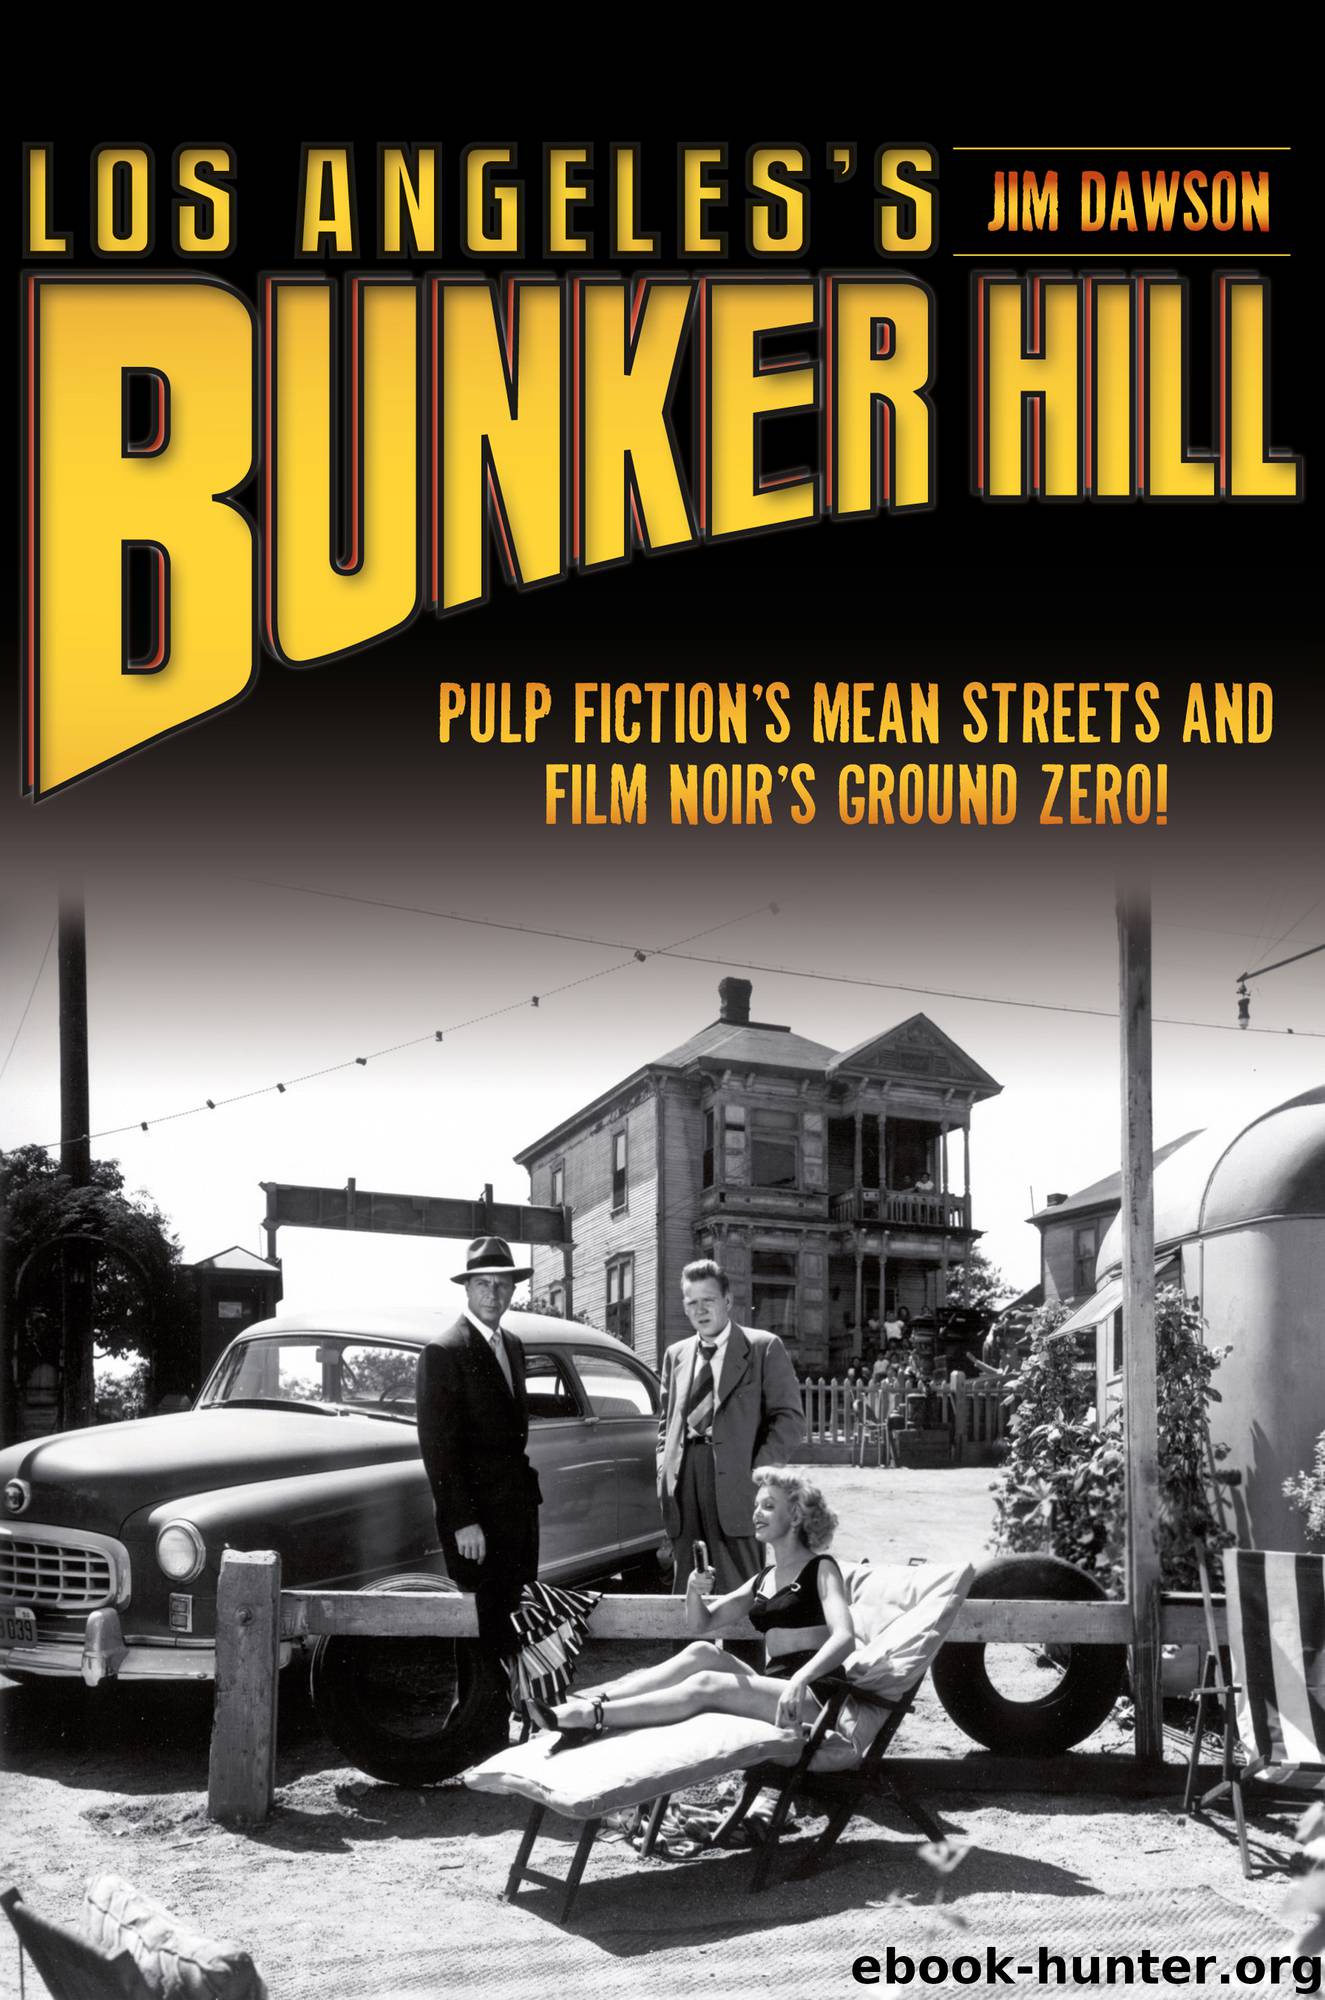 Los Angeles's Bunker Hill by Jim Dawson